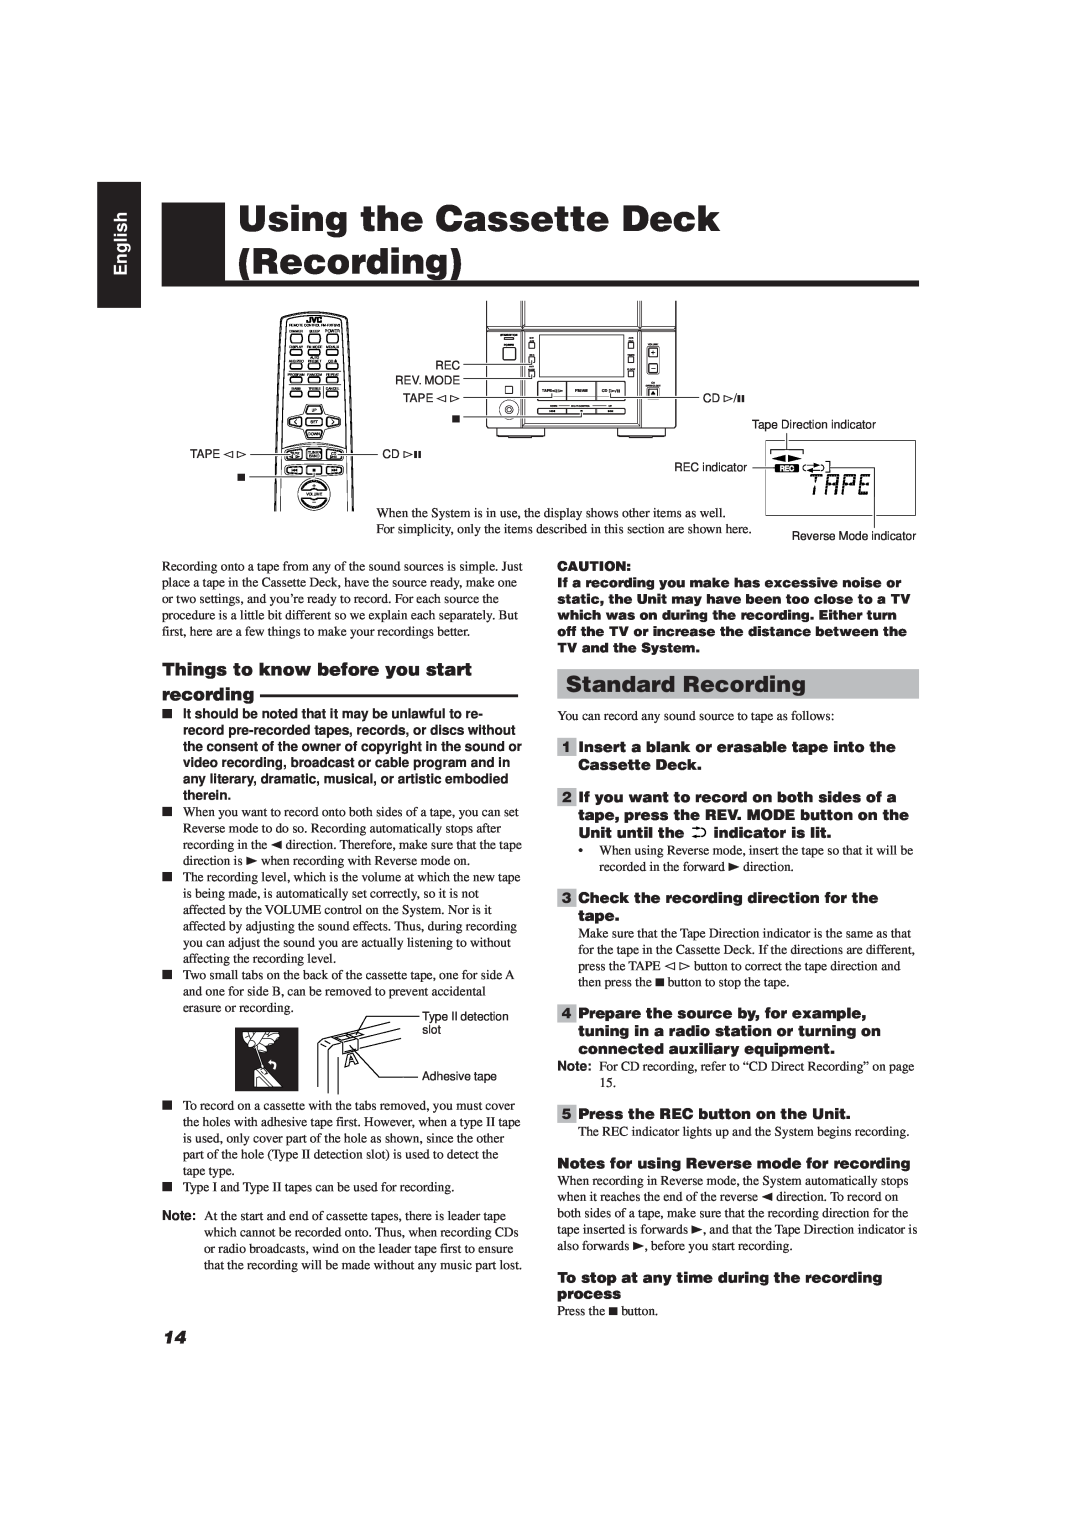 JVC FS-V30 manual Using the Cassette Deck Recording, Standard Recording, English 